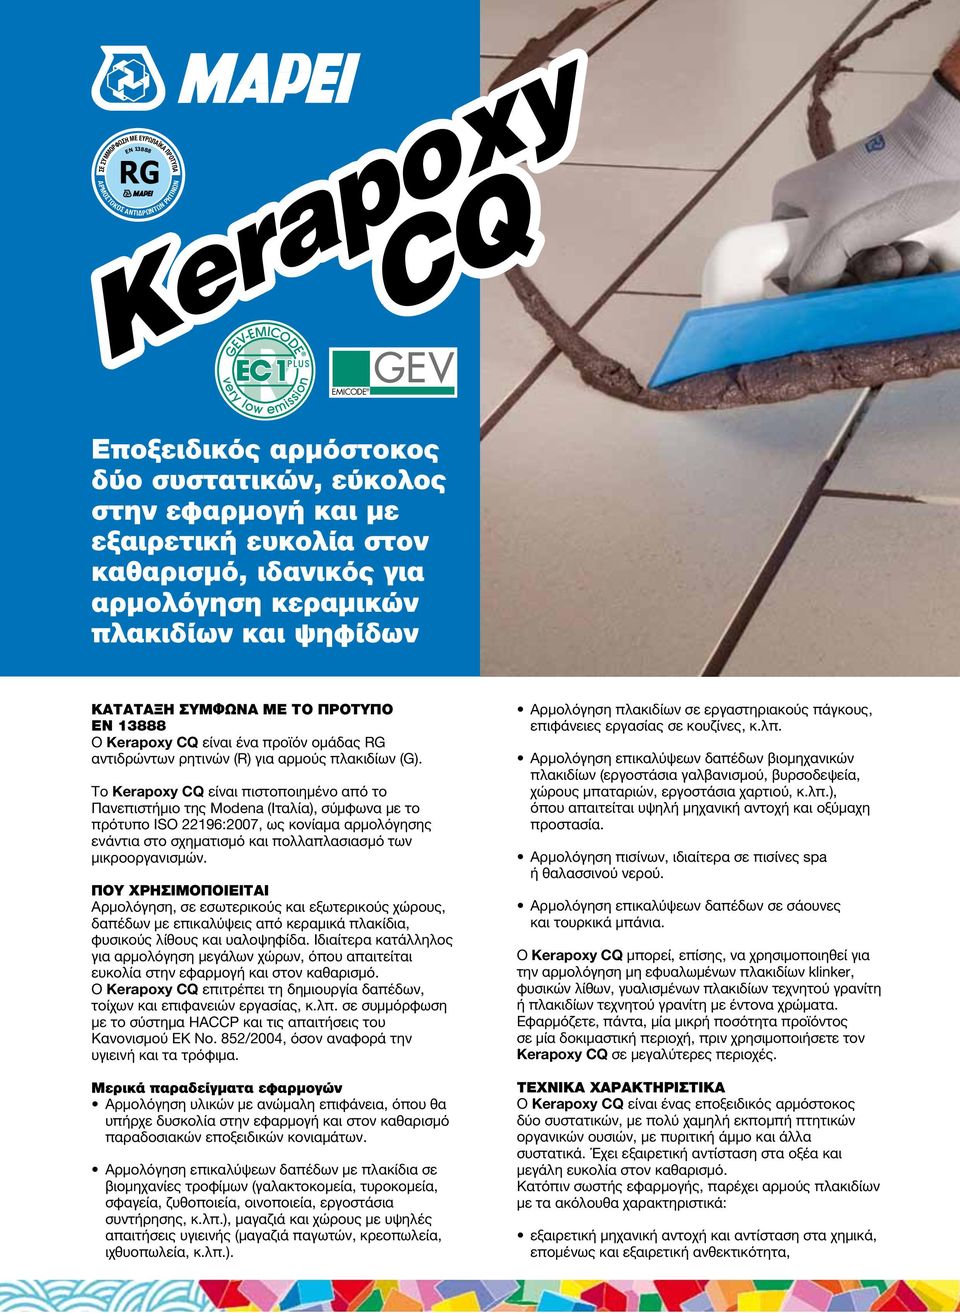 To Kerapoxy CQ είναι πιστοποιημένο από το Πανεπιστήμιο της Modena (Ιταλία), σύμφωνα με το πρότυπο ISO 22196:2007, ως κονίαμα αρμολόγησης ενάντια στο σχηματισμό και πολλαπλασιασμό των μικροοργανισμών.